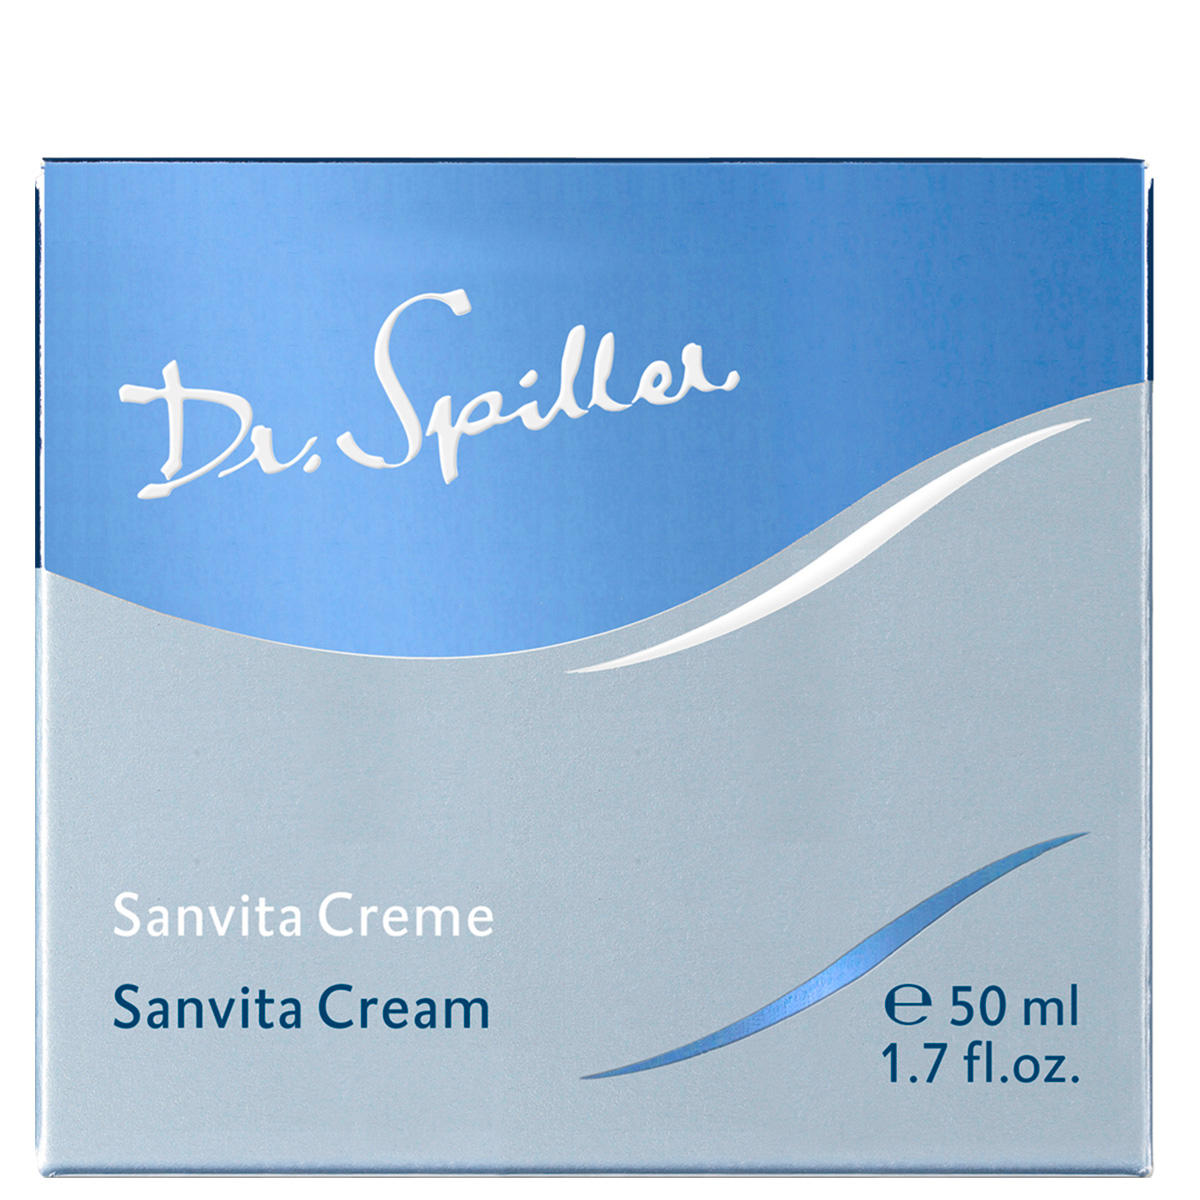 Dr. Spiller Biomimetic SkinCare Sanvita Creme 50 ml - 3